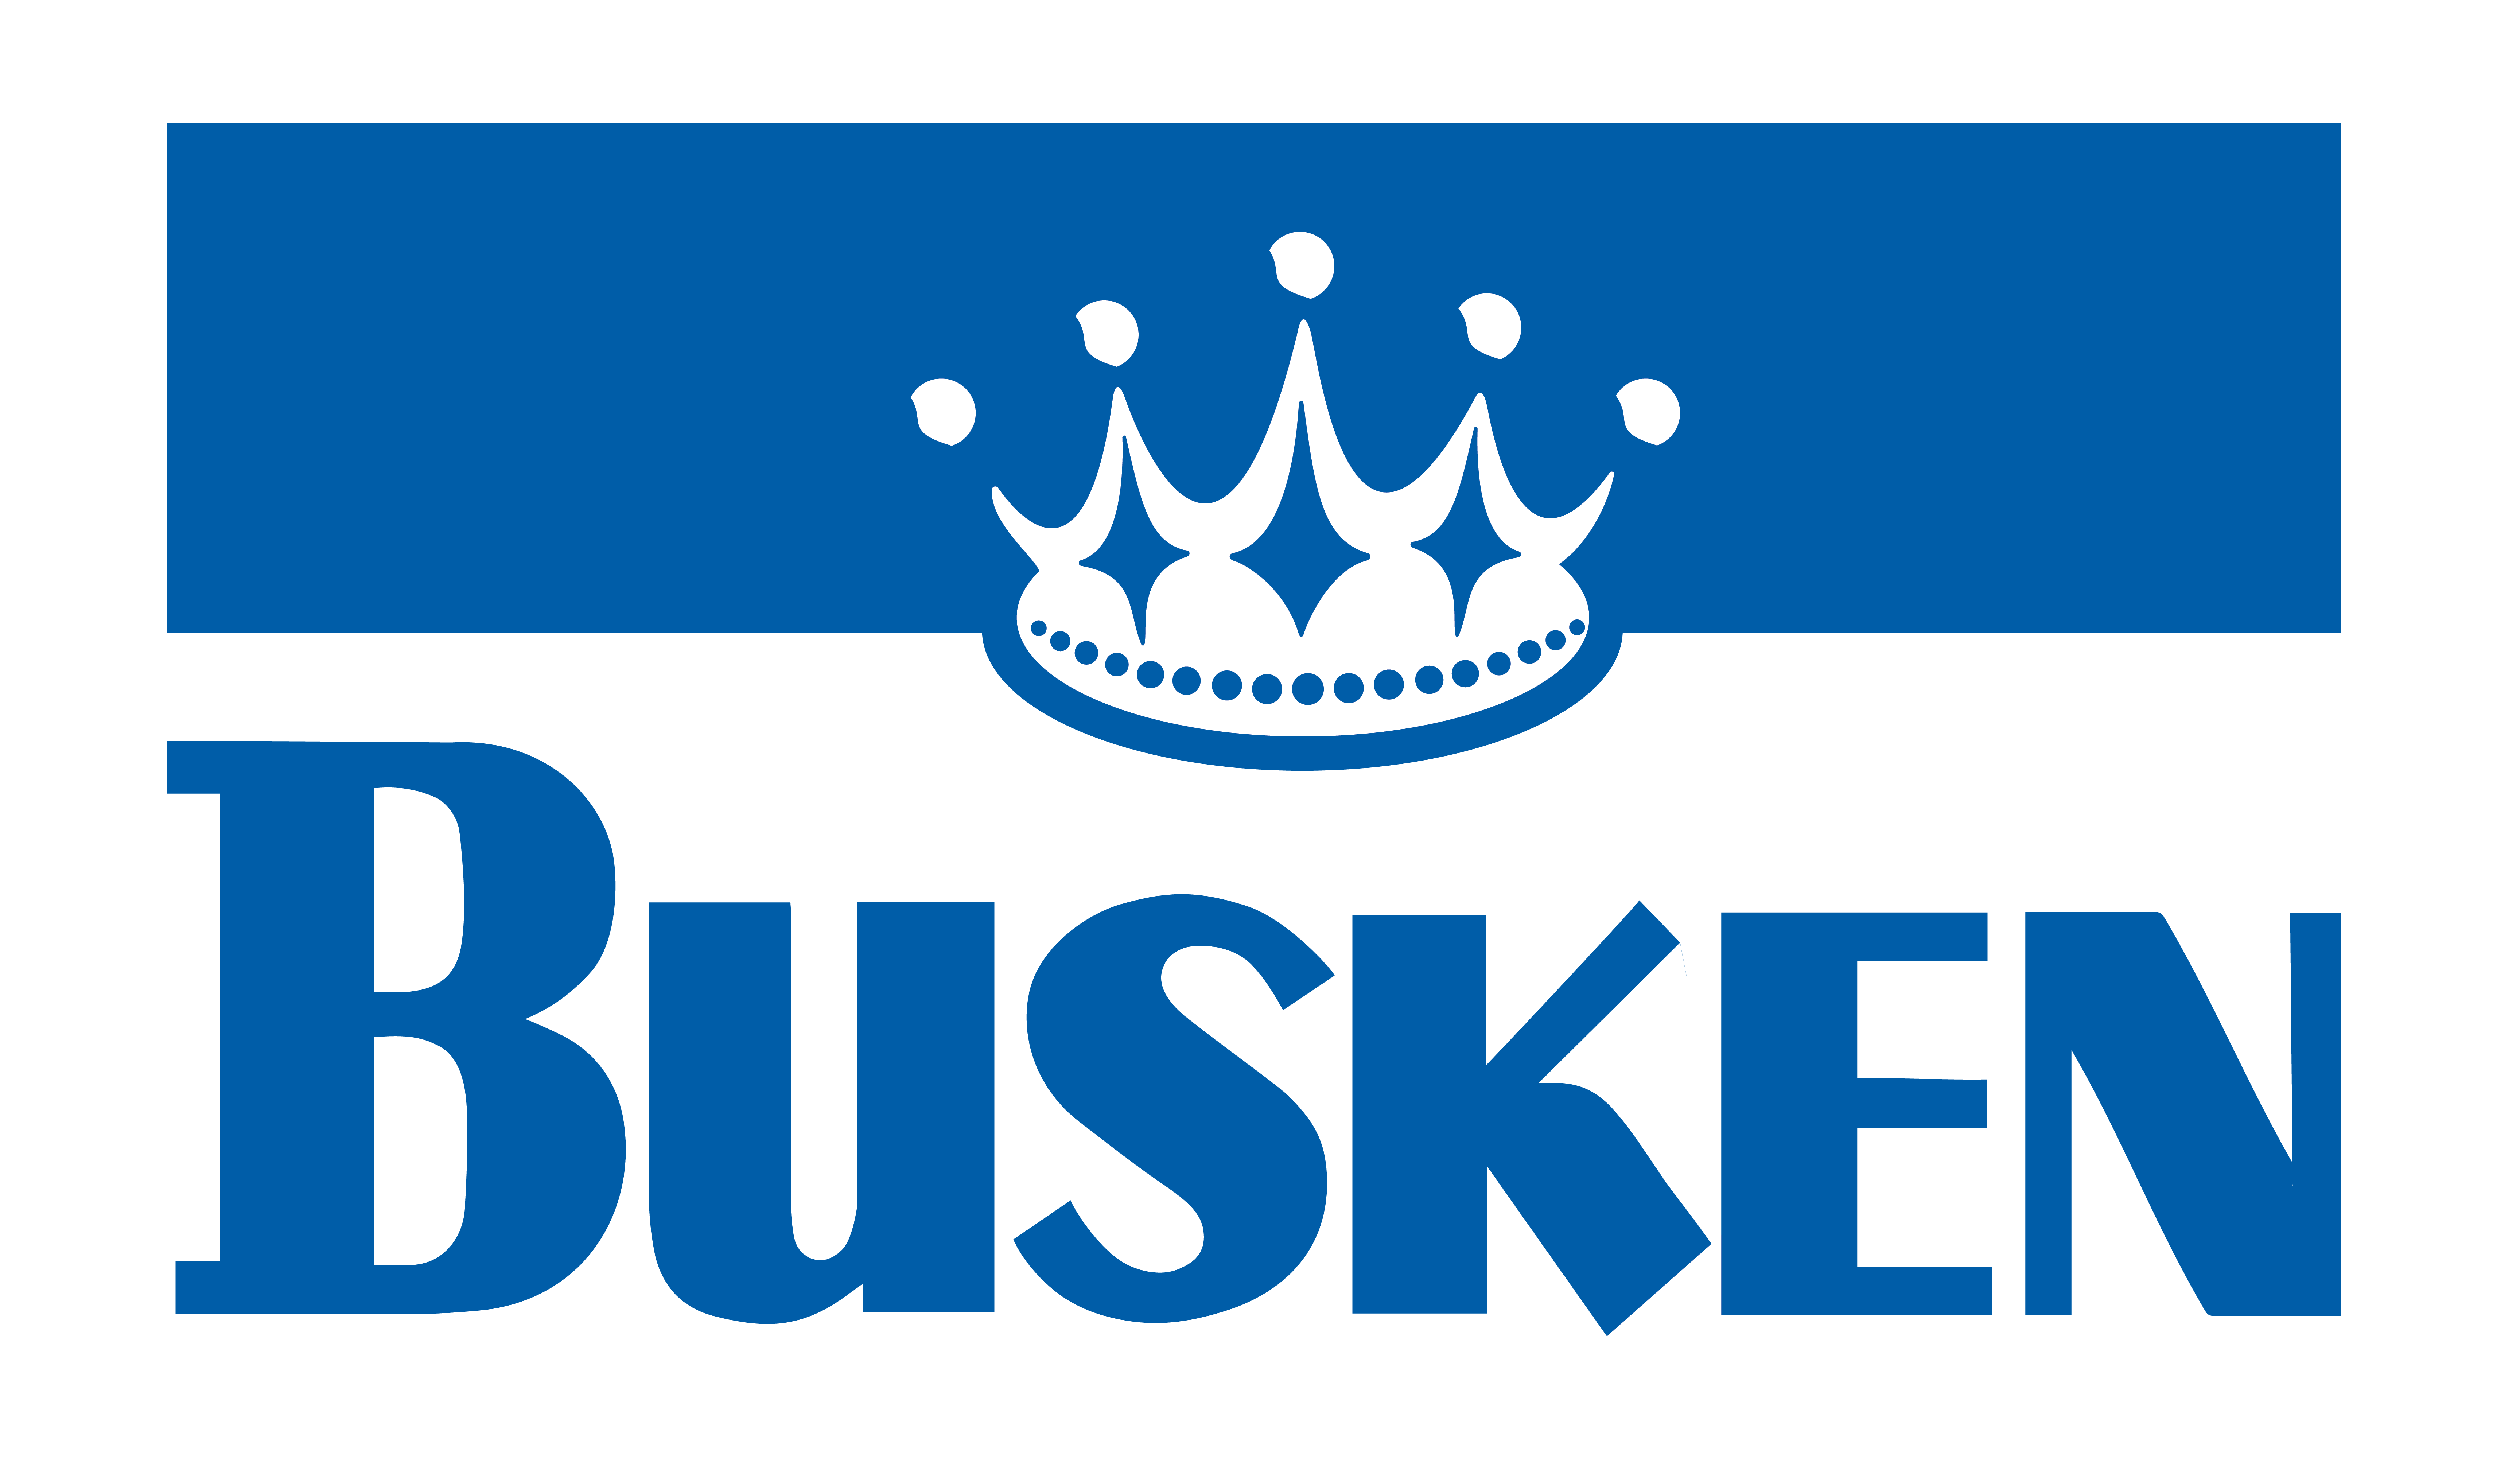 Busken logo Retro.png